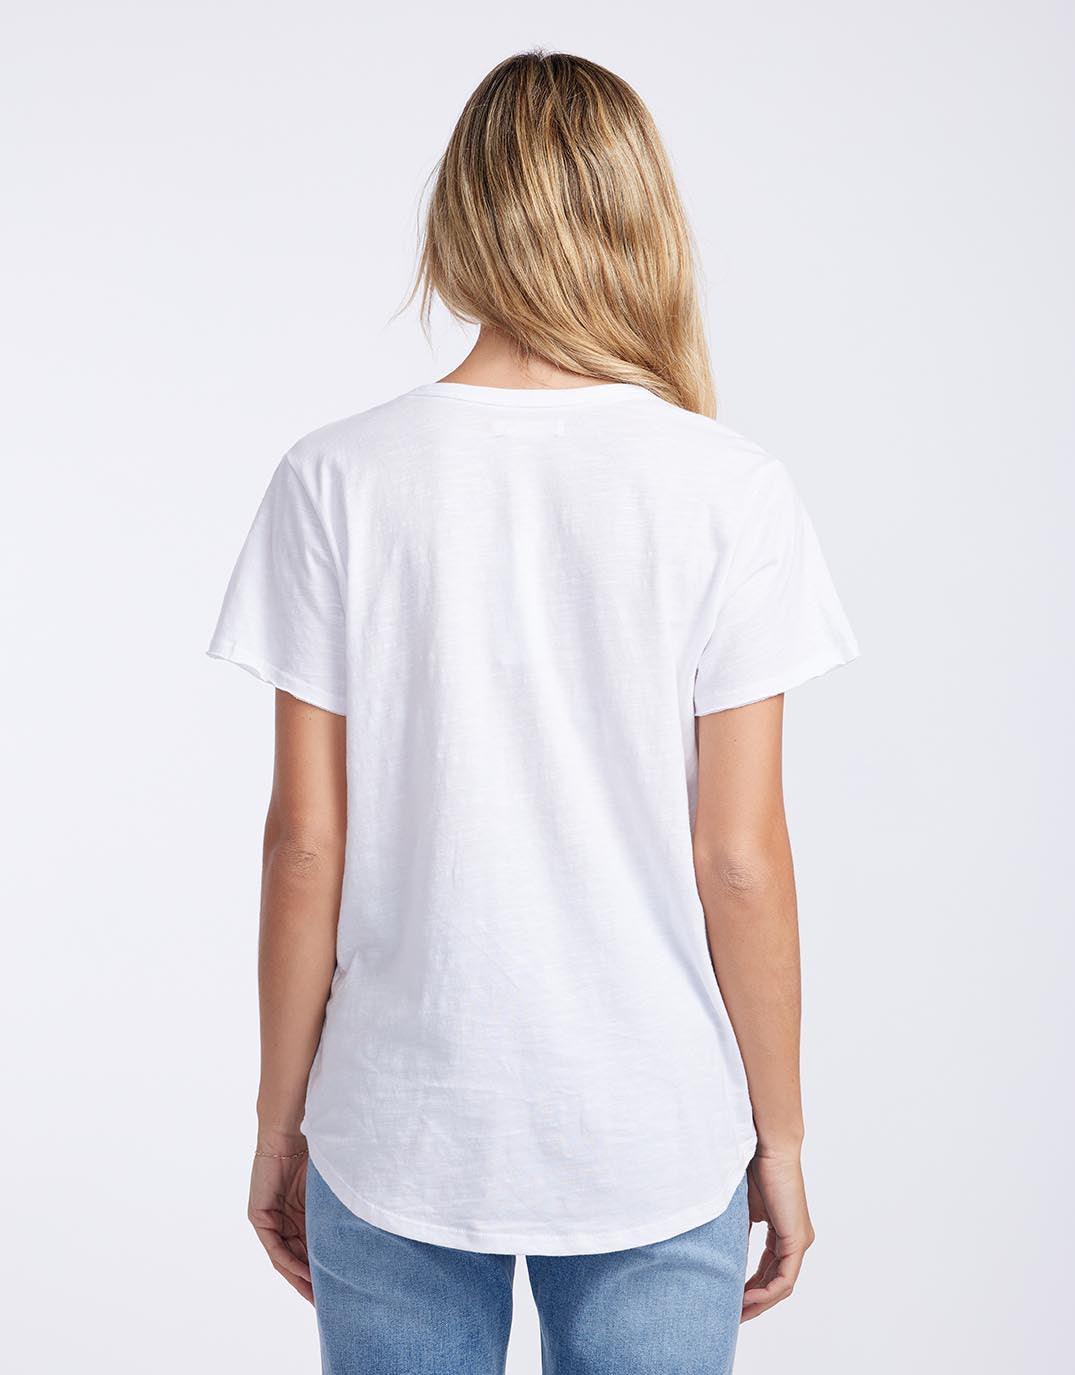 White & Co. - Original Round Neck T-Shirt - White - White & Co Living Tees & Tanks